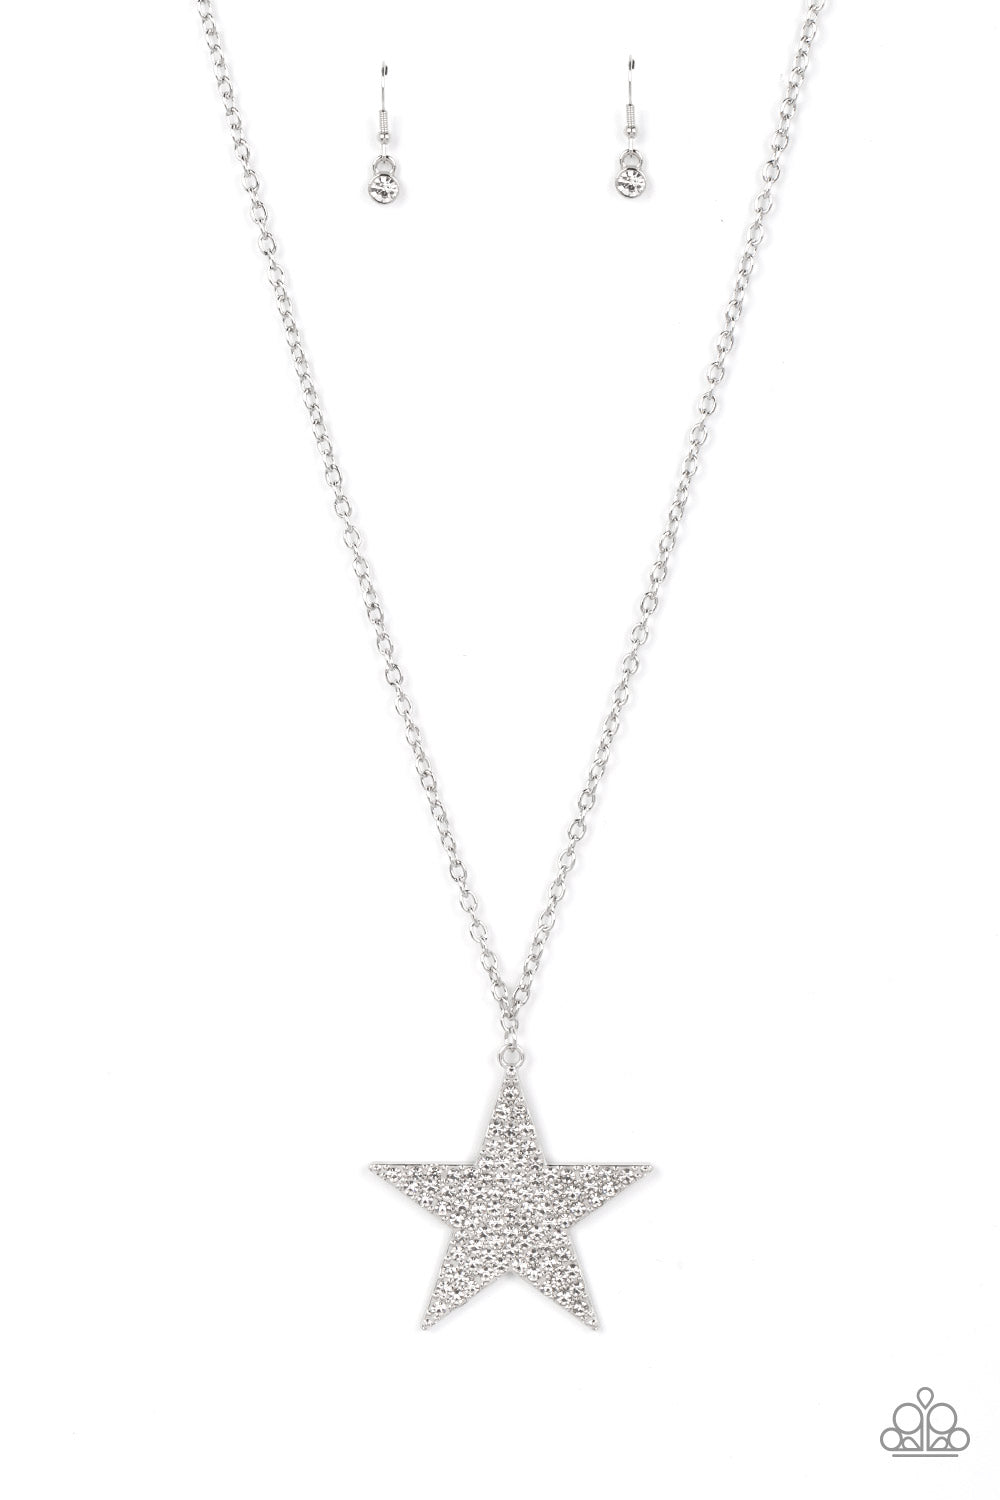 Rock Star Sparkle White Necklace - Jewelry by Bretta